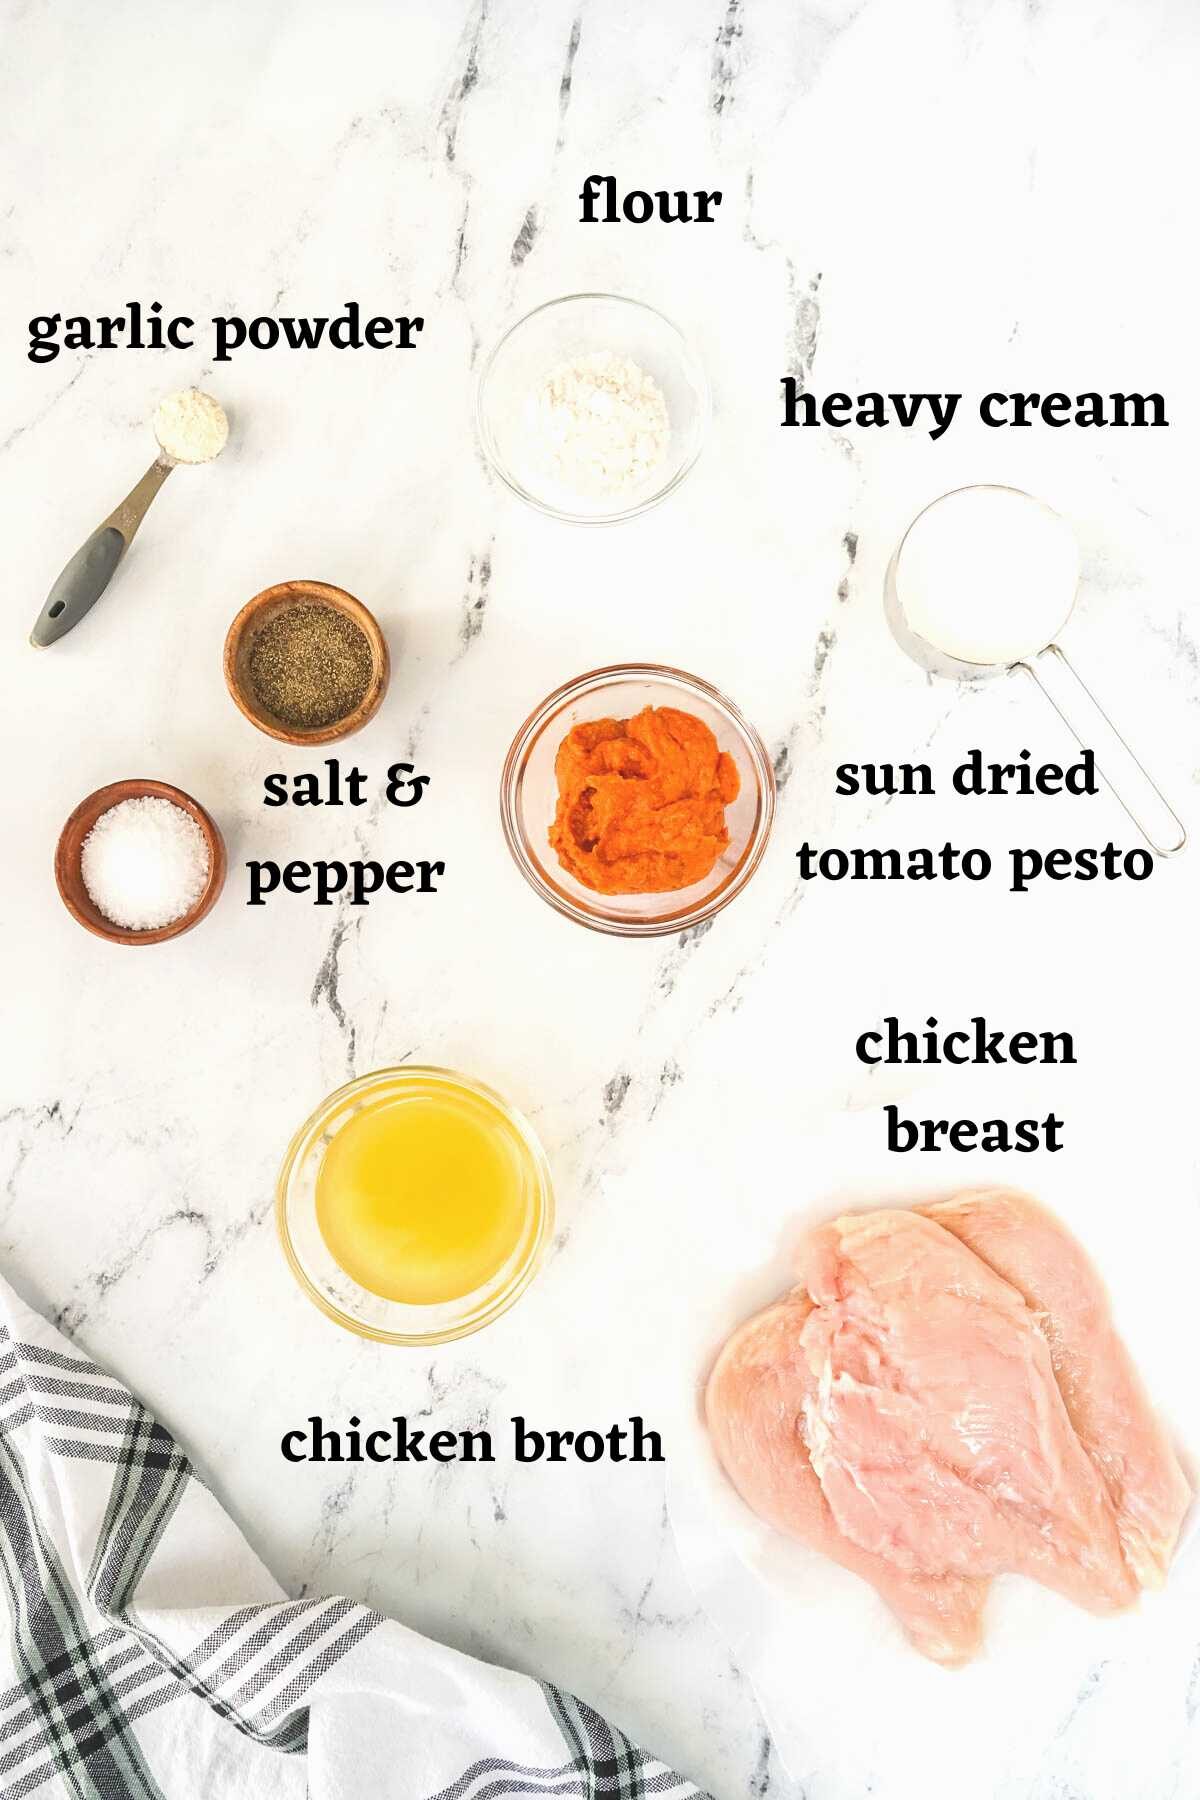 Ingredients needed to make Sun dried tomato pesto chicken.